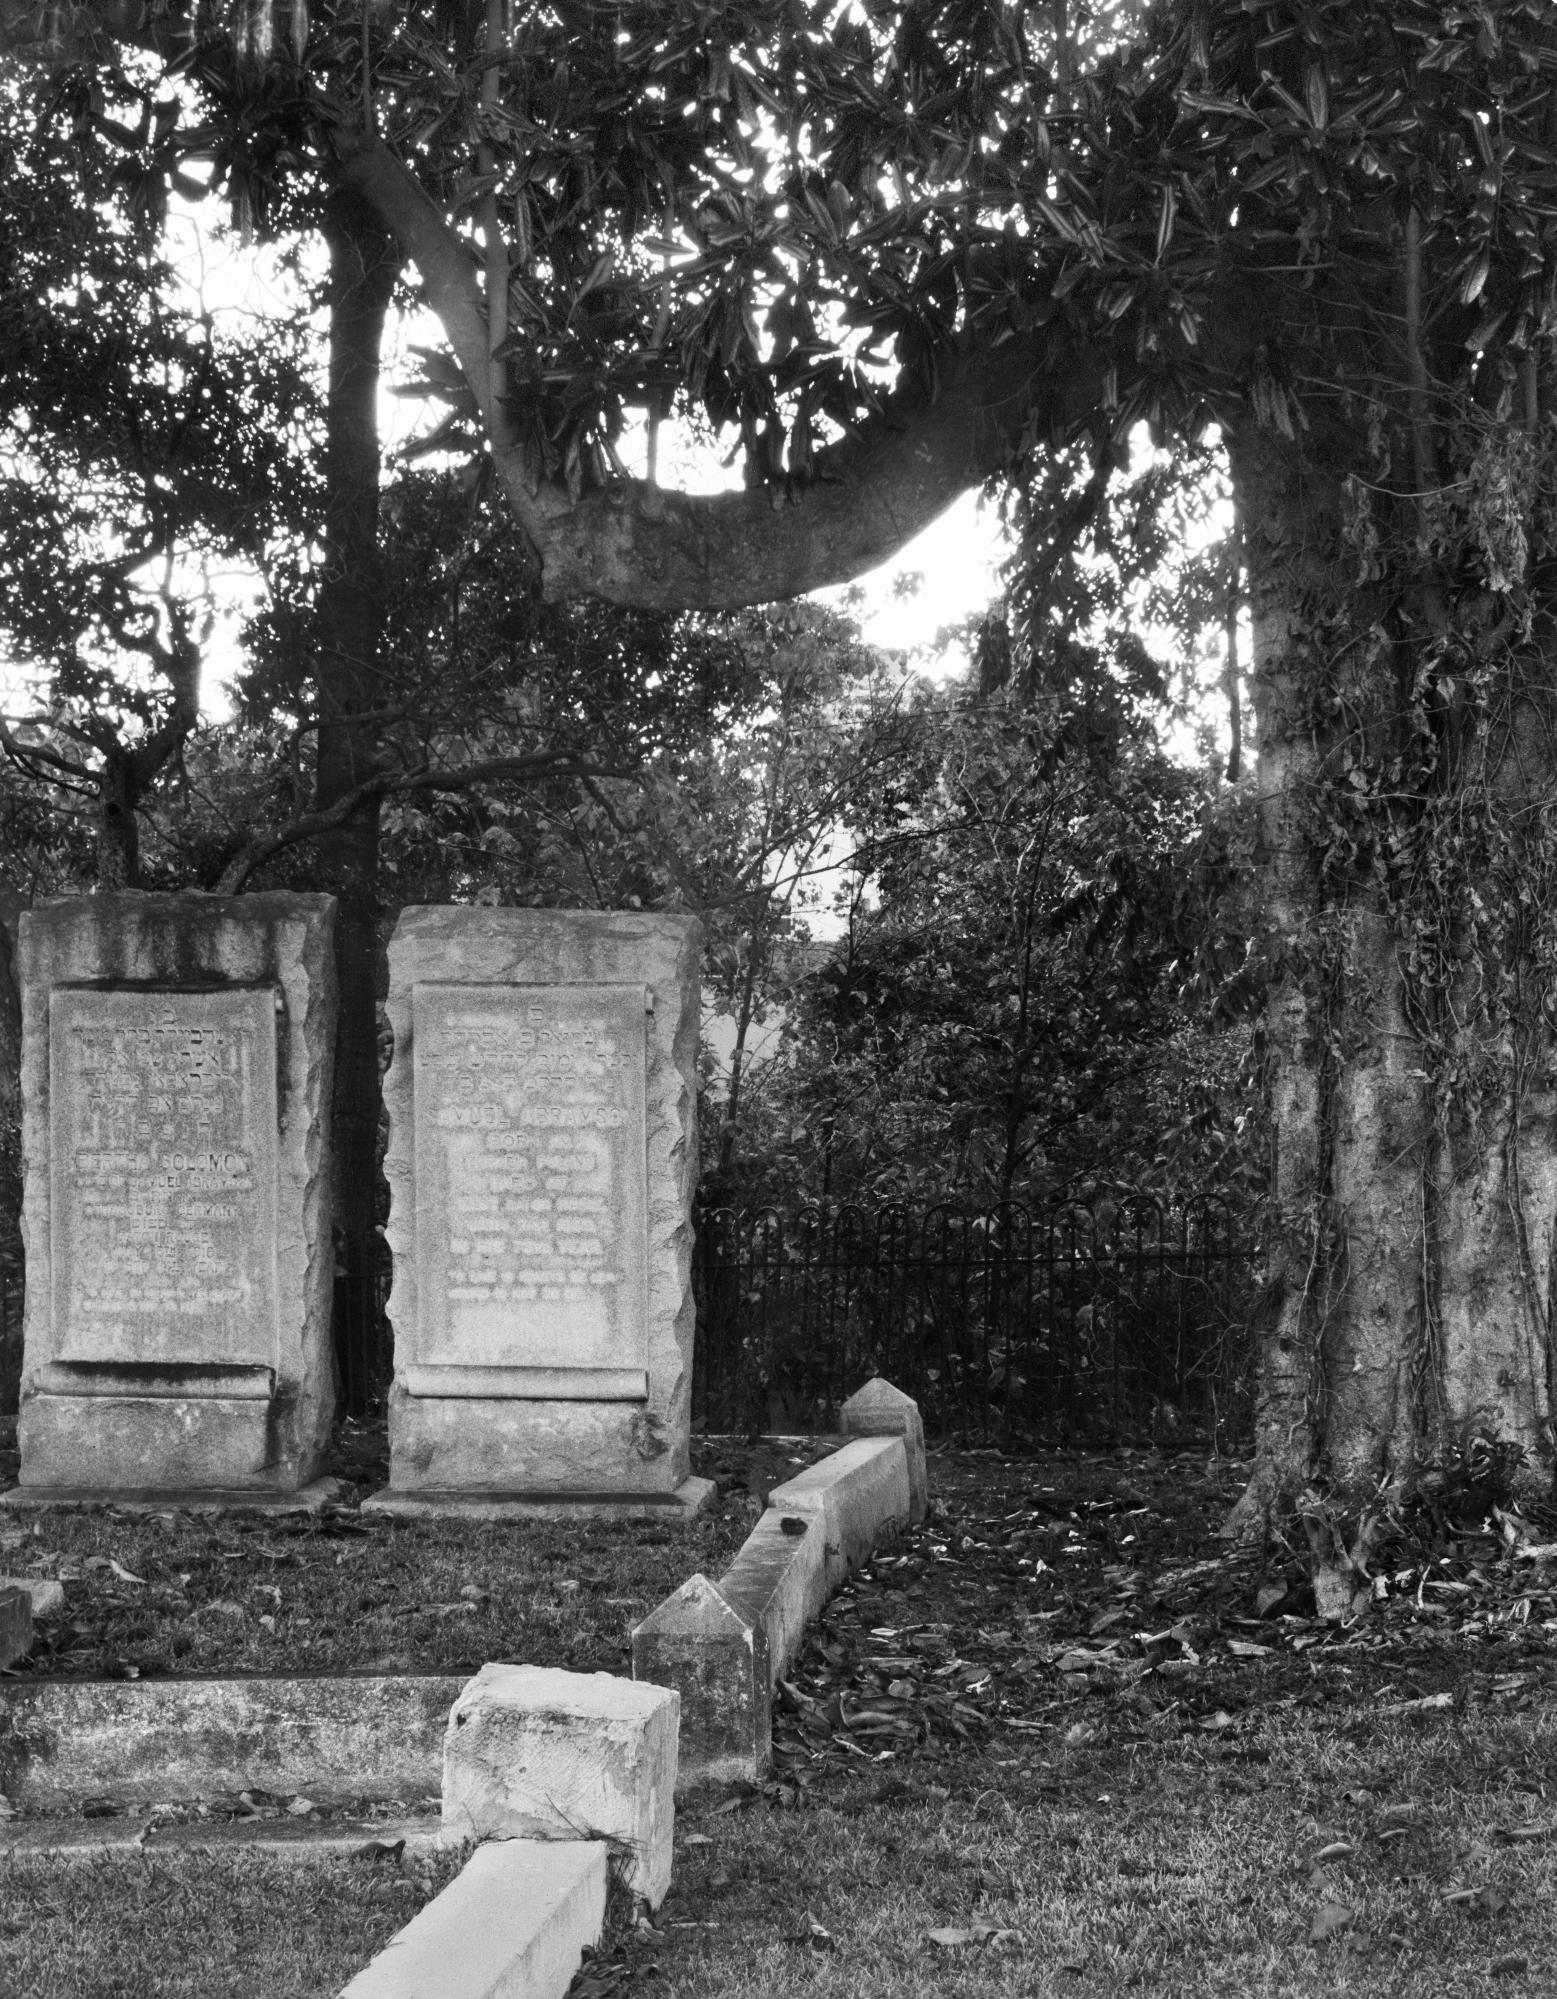 Louisiana - Jewish Cemetery in Baton Rouge, Louisiana